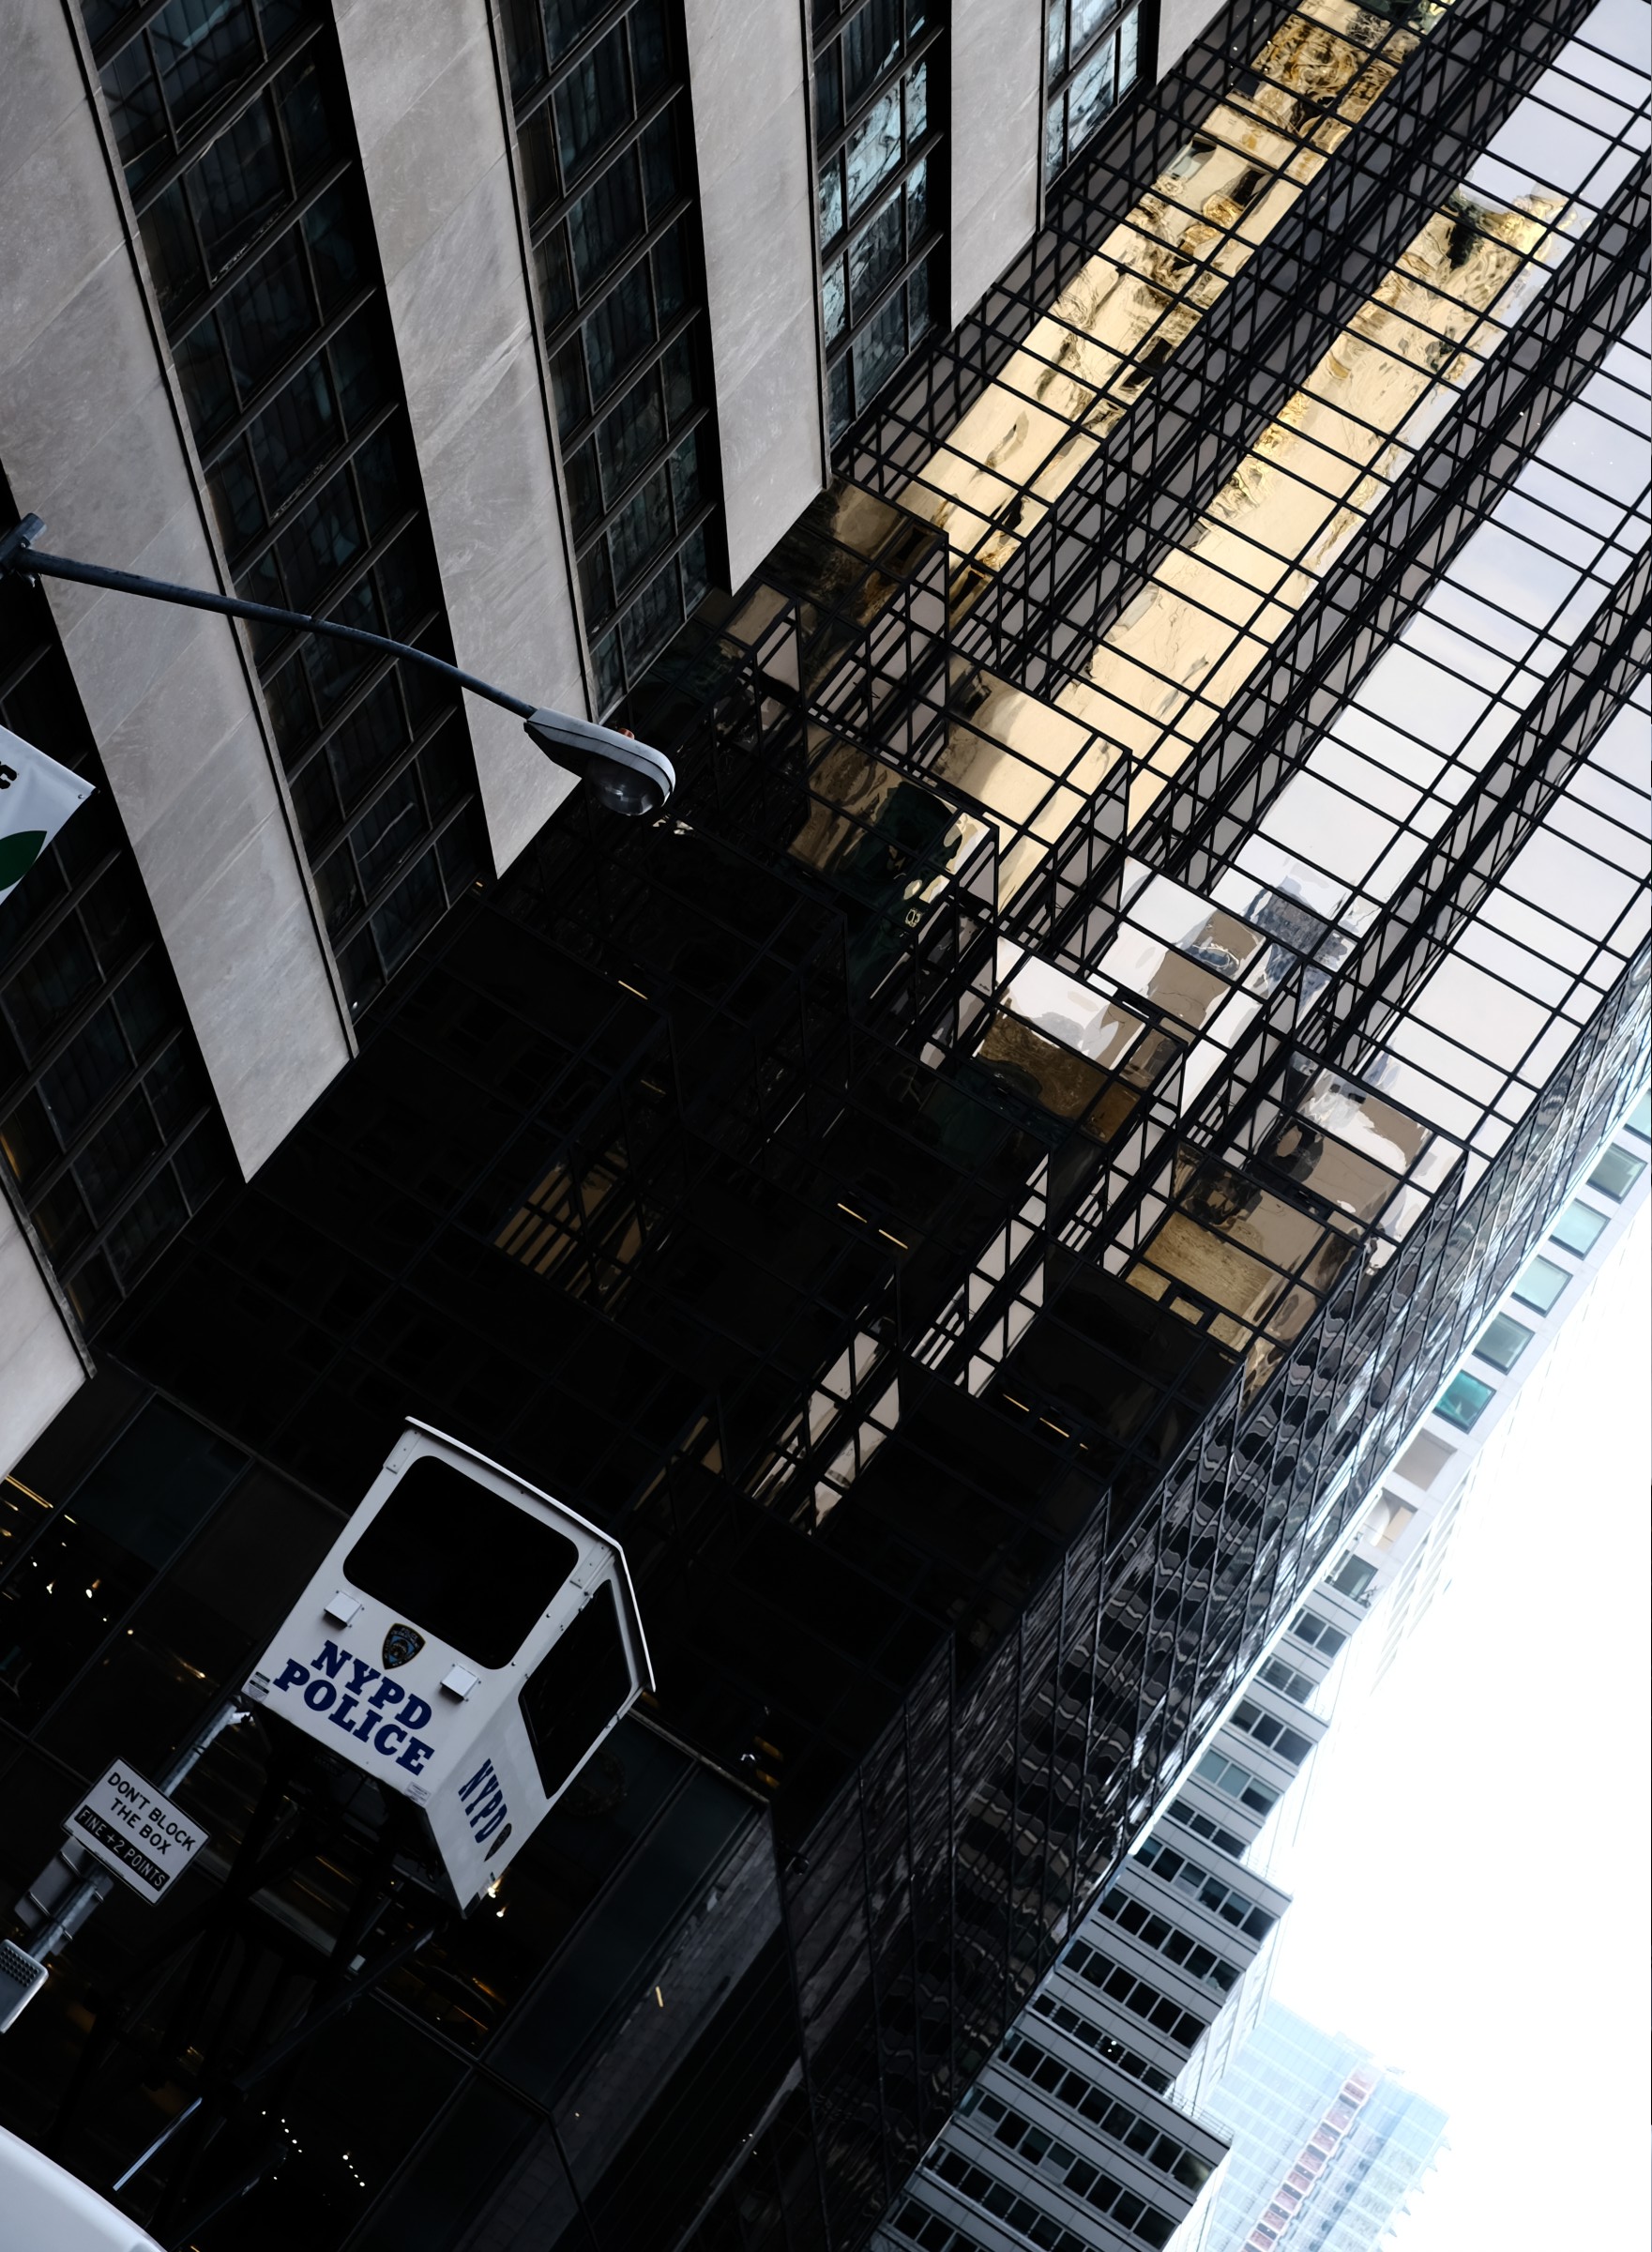 NYPD spy platform at Trump Tower